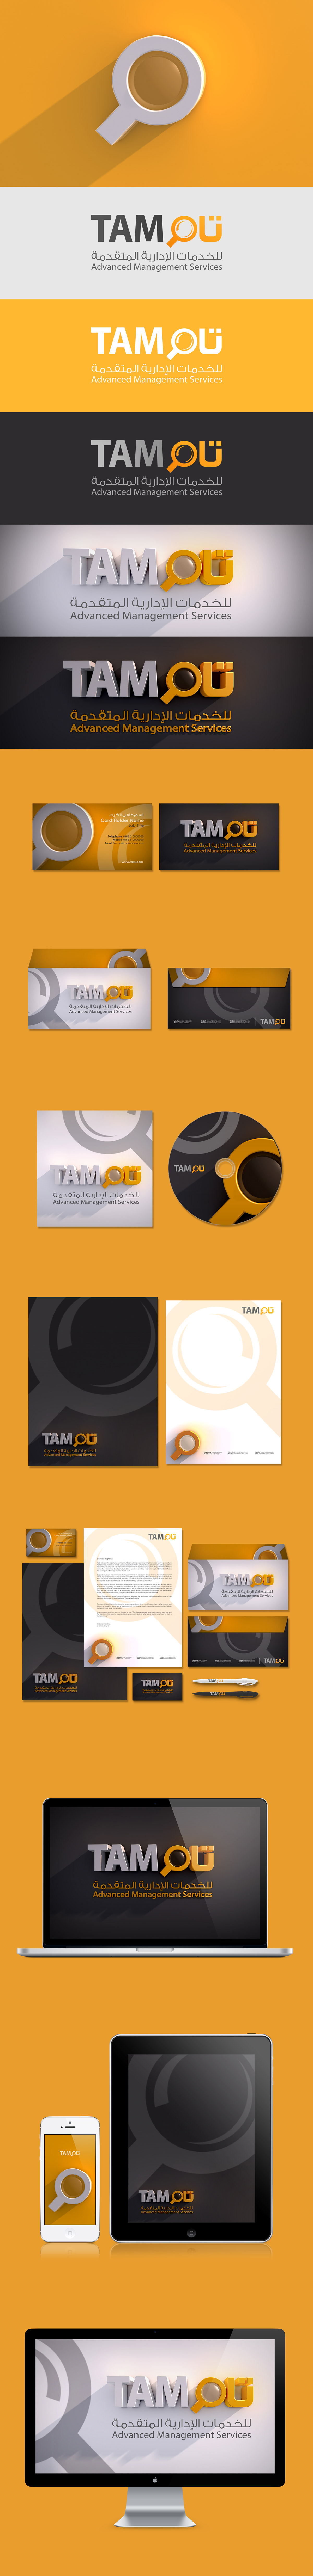 corprat logo company design identity Tam management services ID